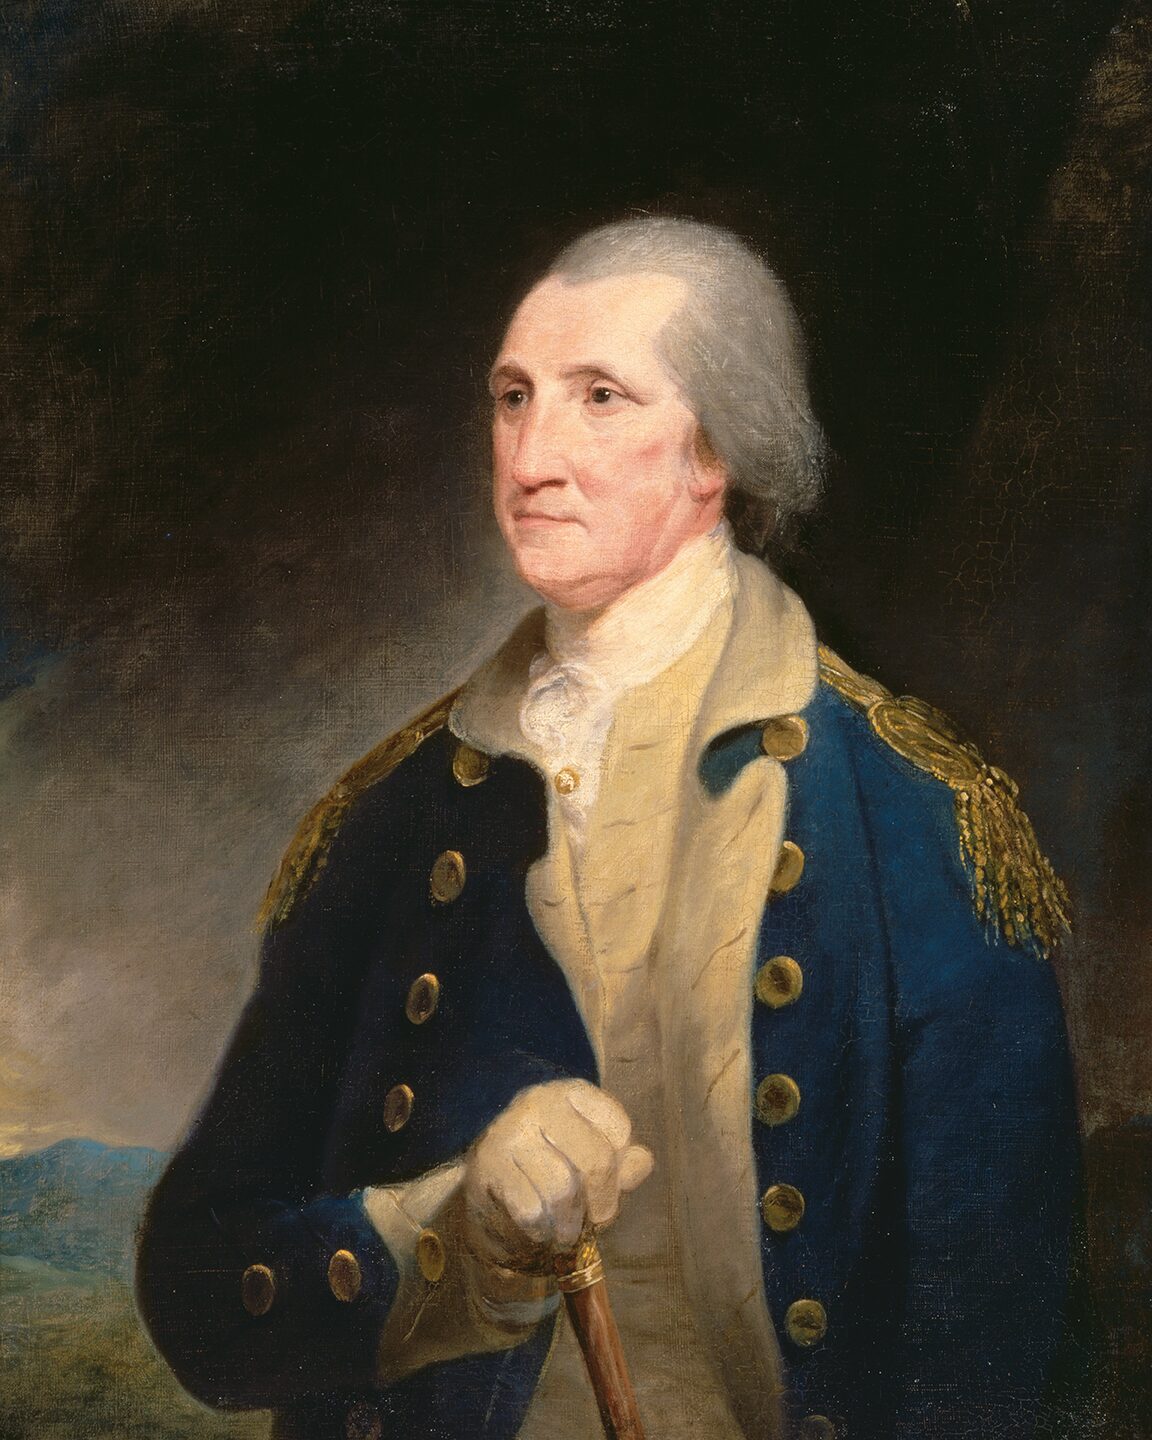 George Washington in Continental Army Uniform | Presidential Portraits